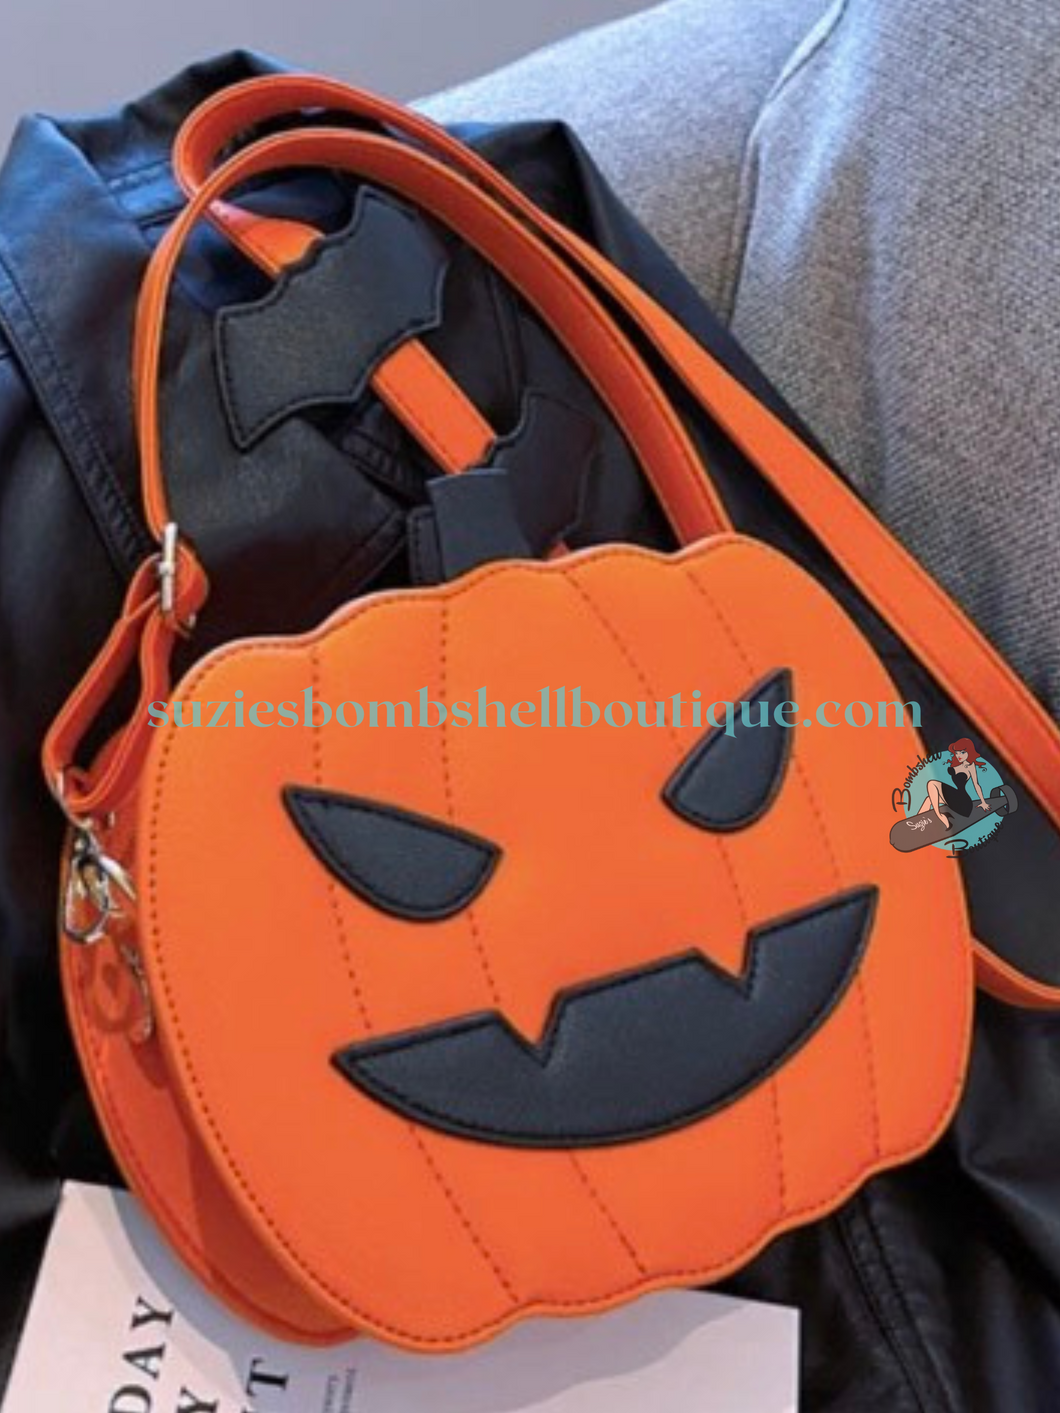 Jack-o-lantern halloween goth pinup crossbody bag purse of carved pumpkin head spooky goth altfashion bag Canadian Pin-Up Shop Suzie's Bombshell Boutique